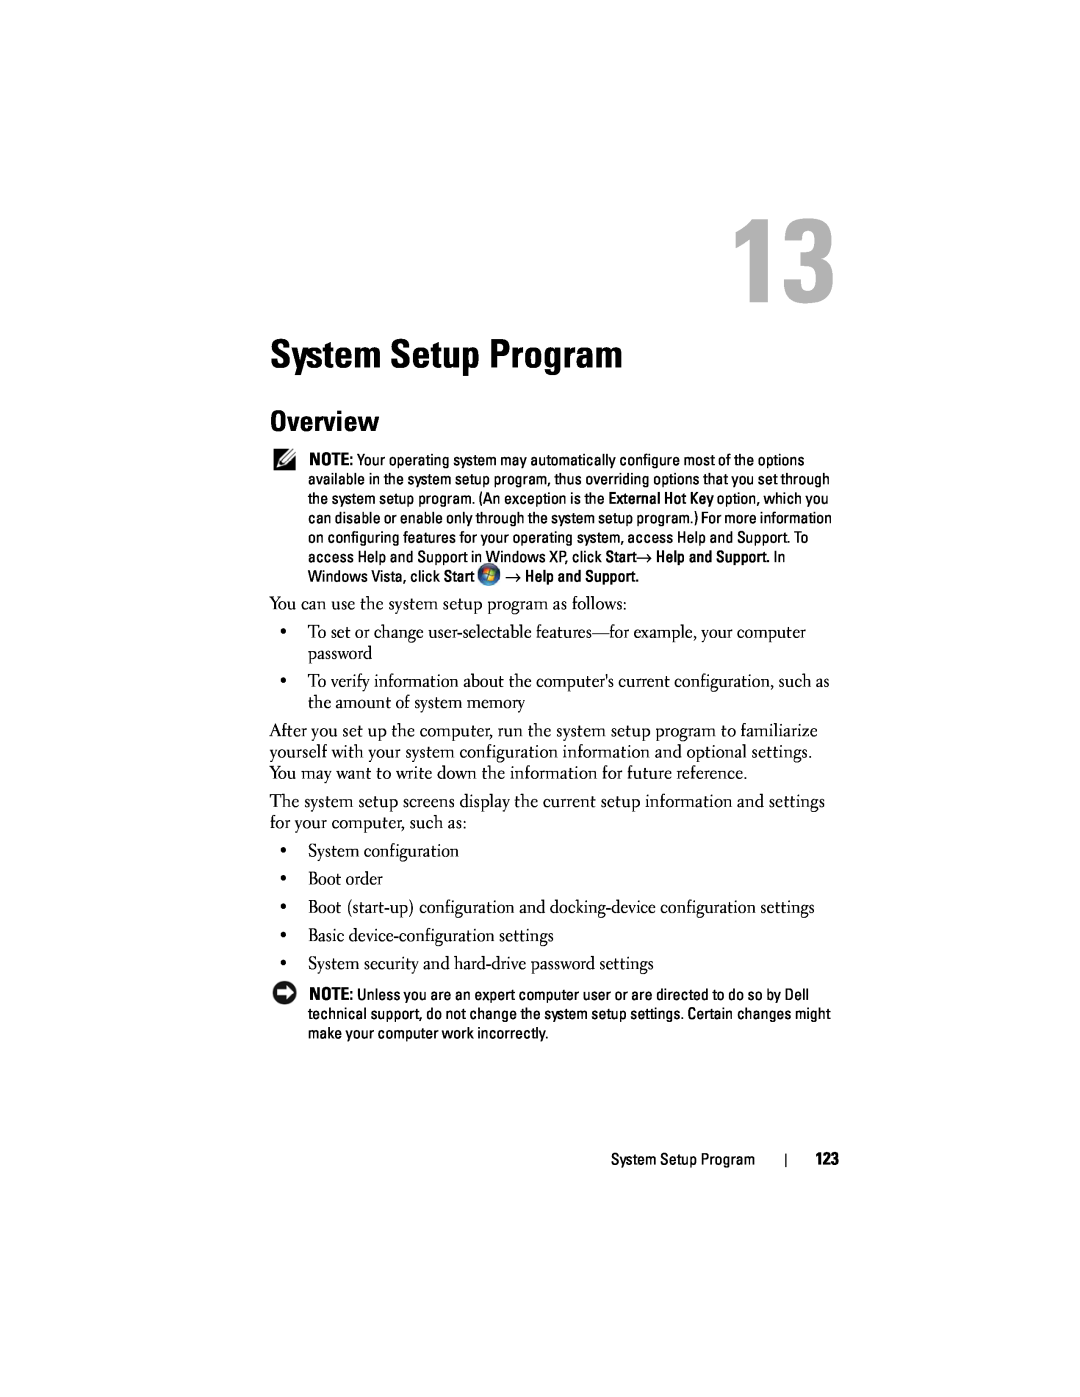 Dell D530 manual System Setup Program, Overview 